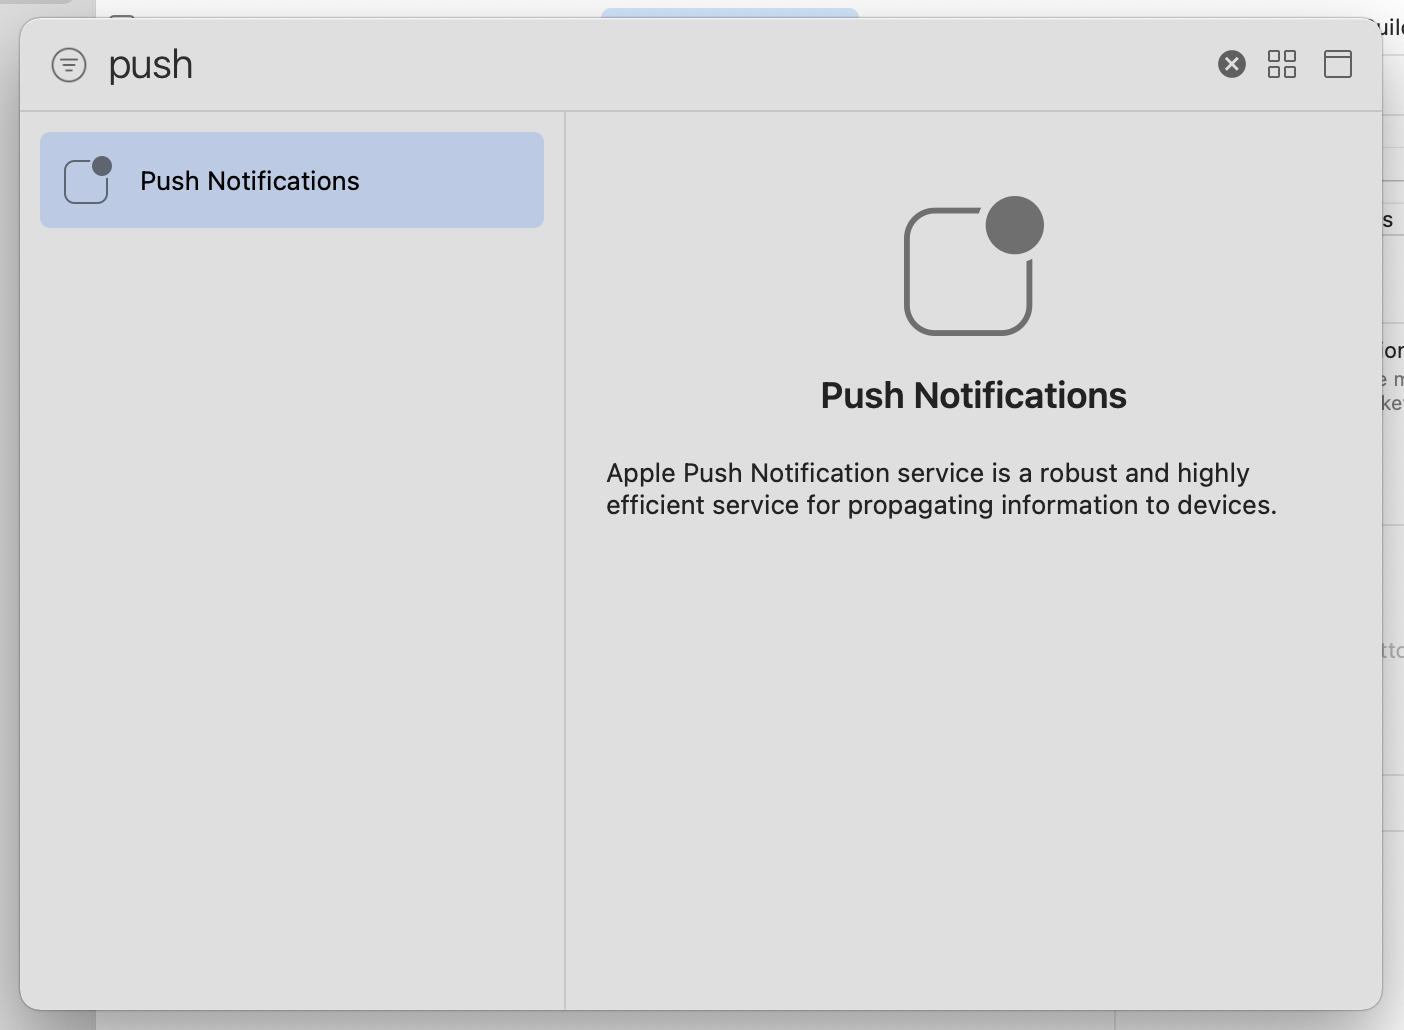 Select the push notification option